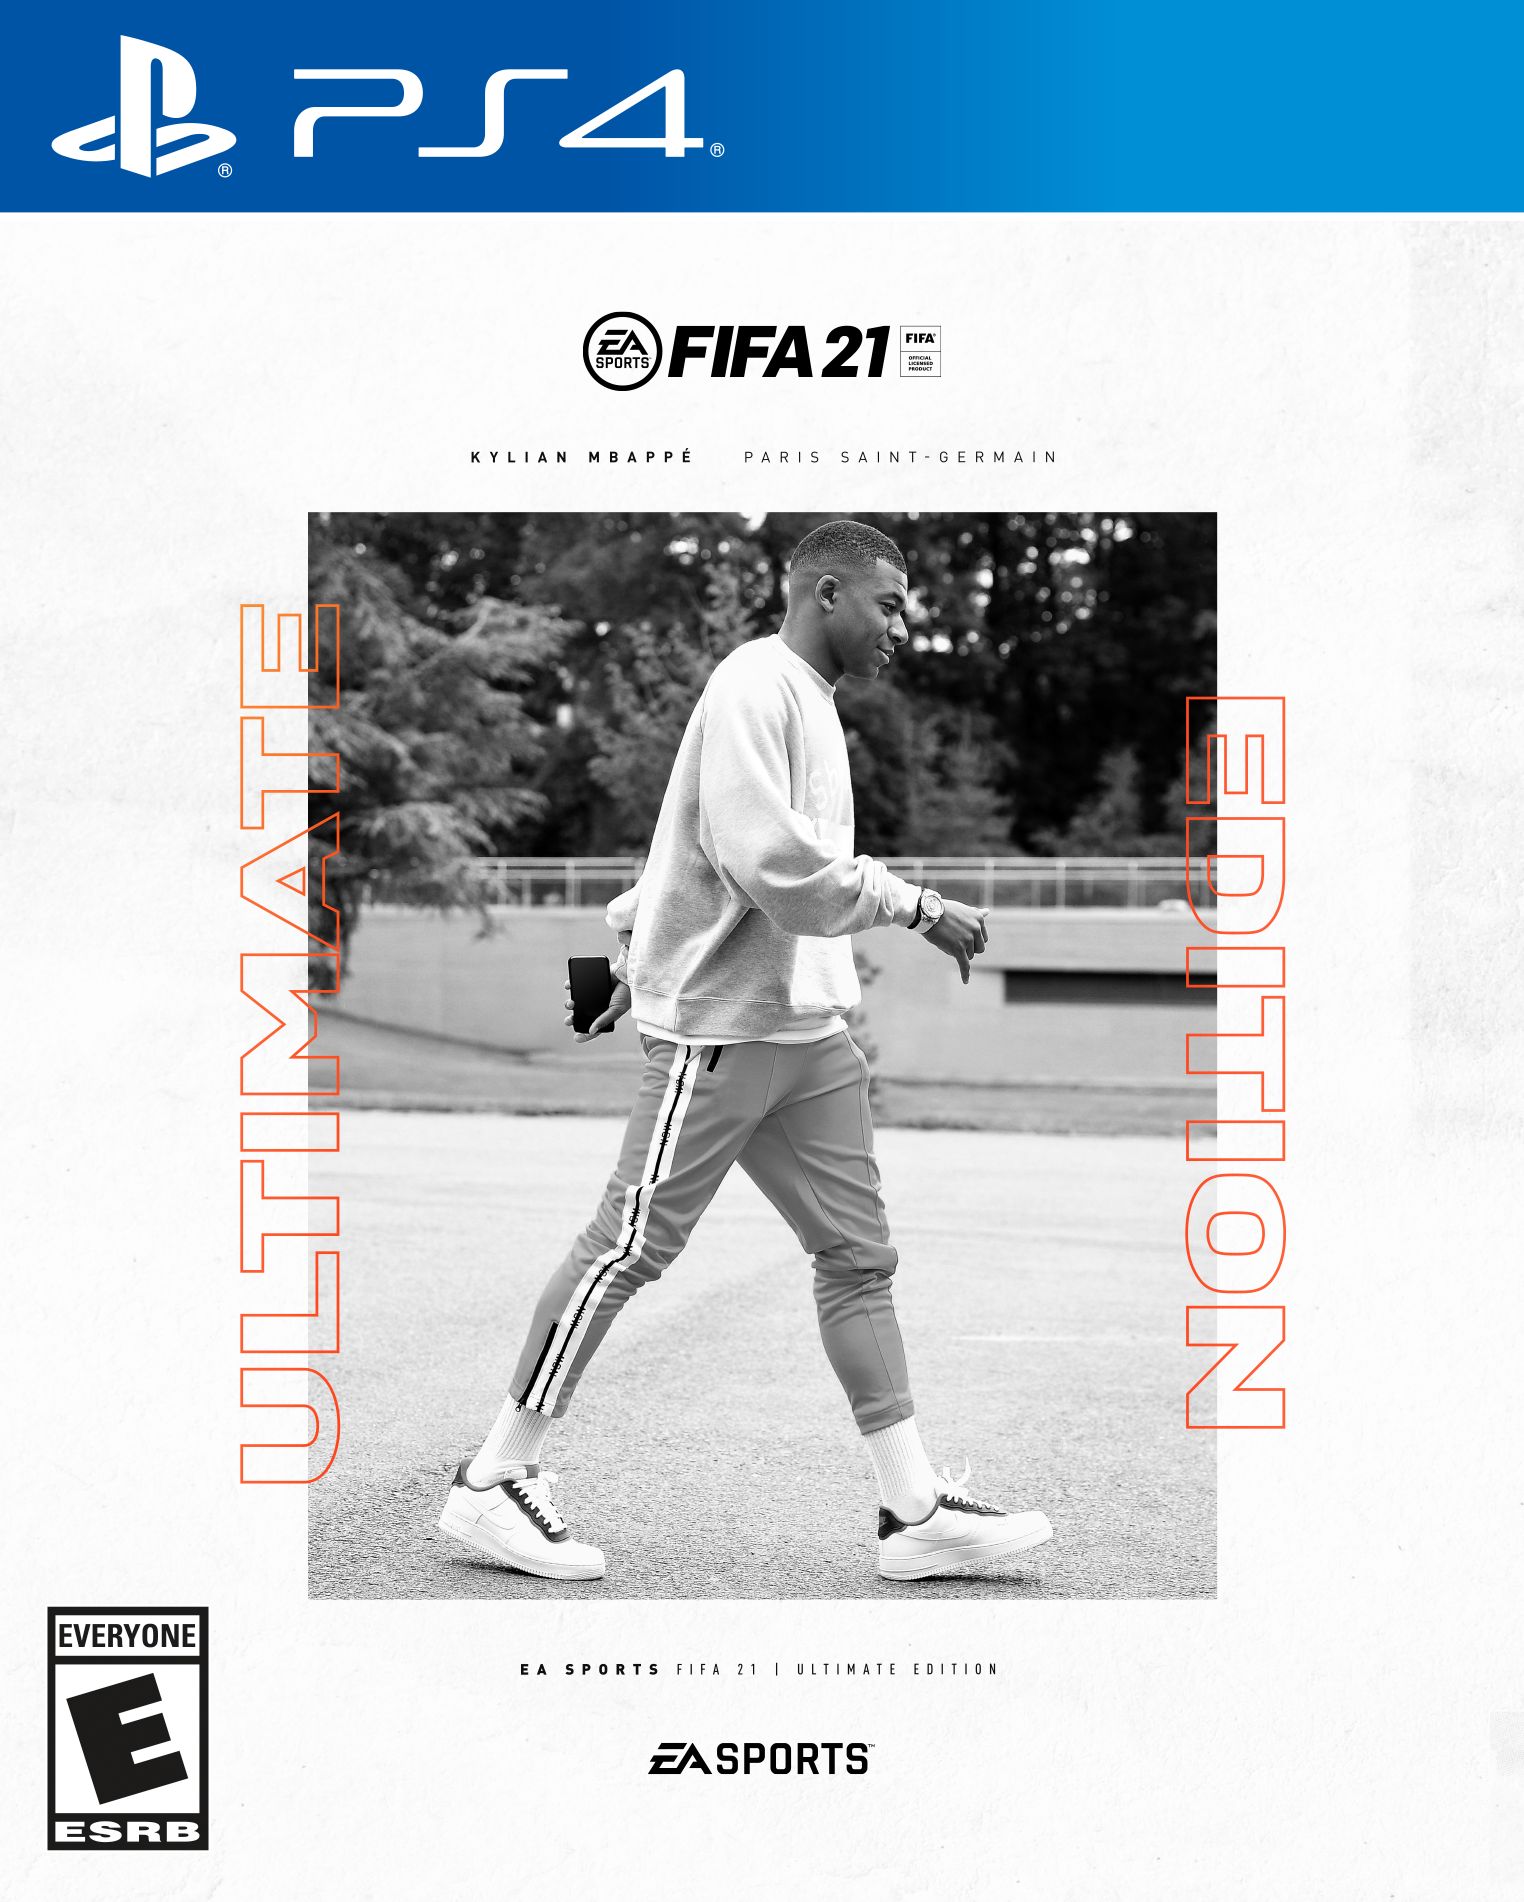 Обложка FIFA 21 Ultimate Edition.
Источник: EA Sports